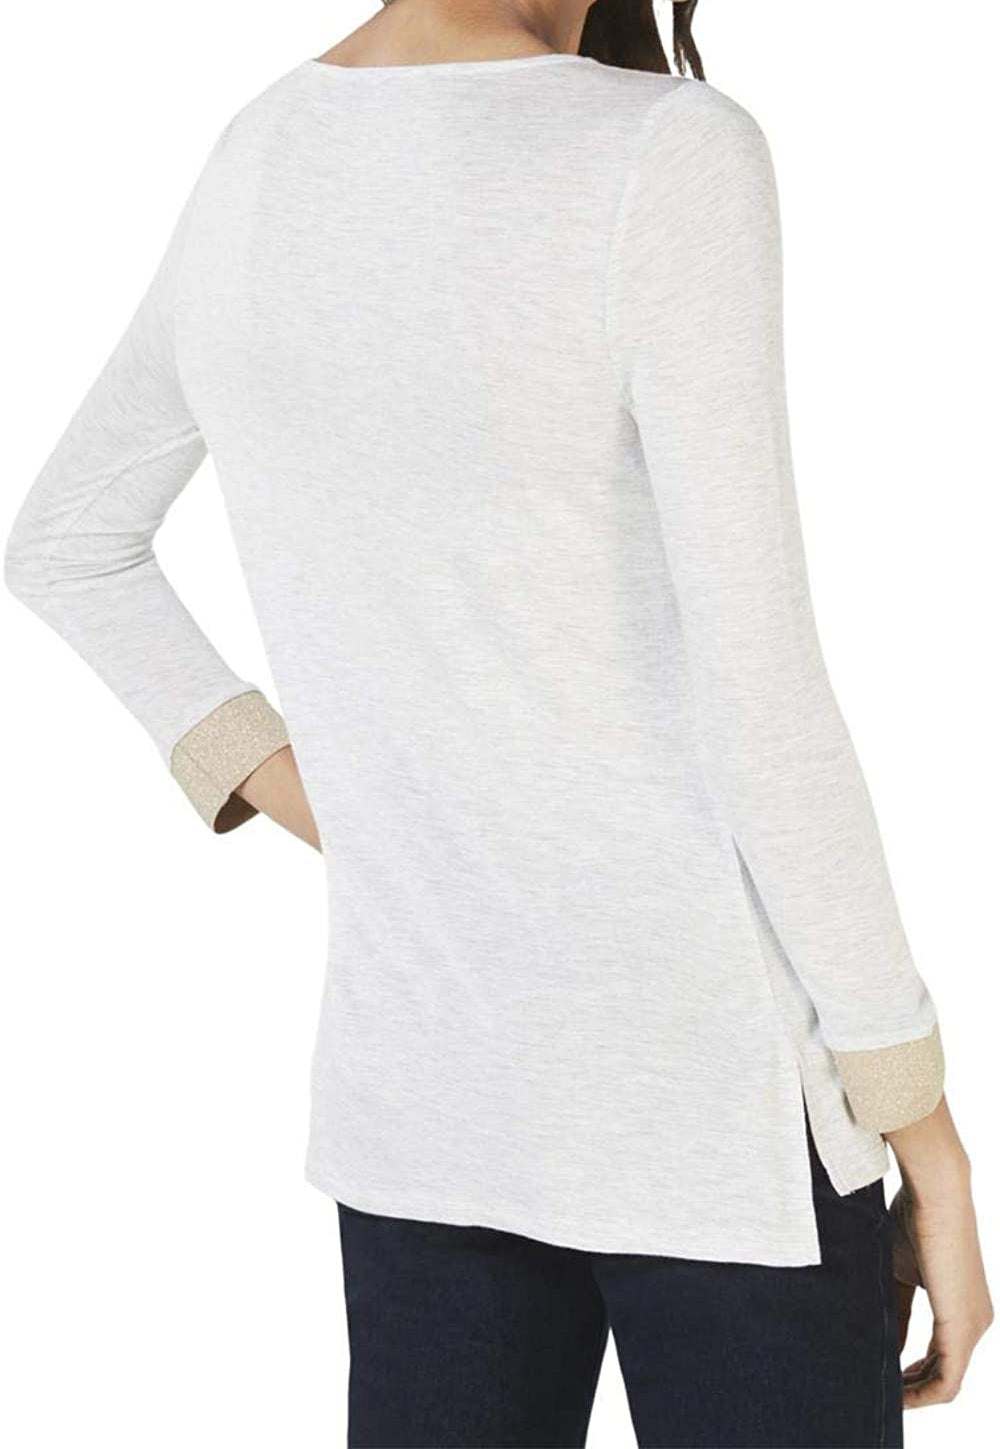 INC International Concepts Womens Shimmer Sleeve Long Sleeve Top